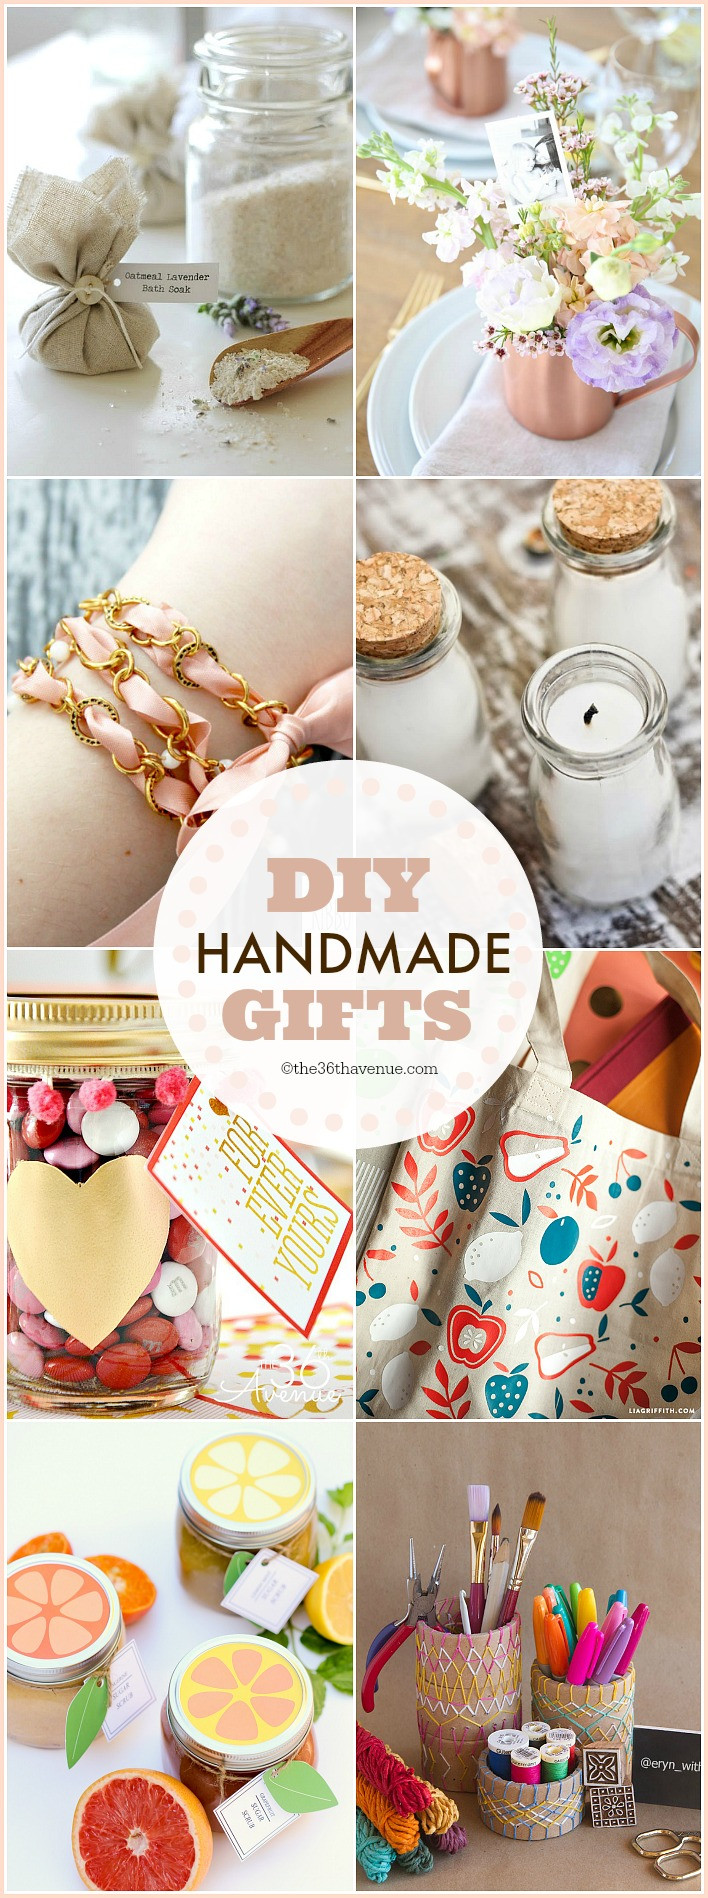 Handmade Birthday Gift Ideas
 100 Handmade Gifts Under Five Dollars The 36th AVENUE